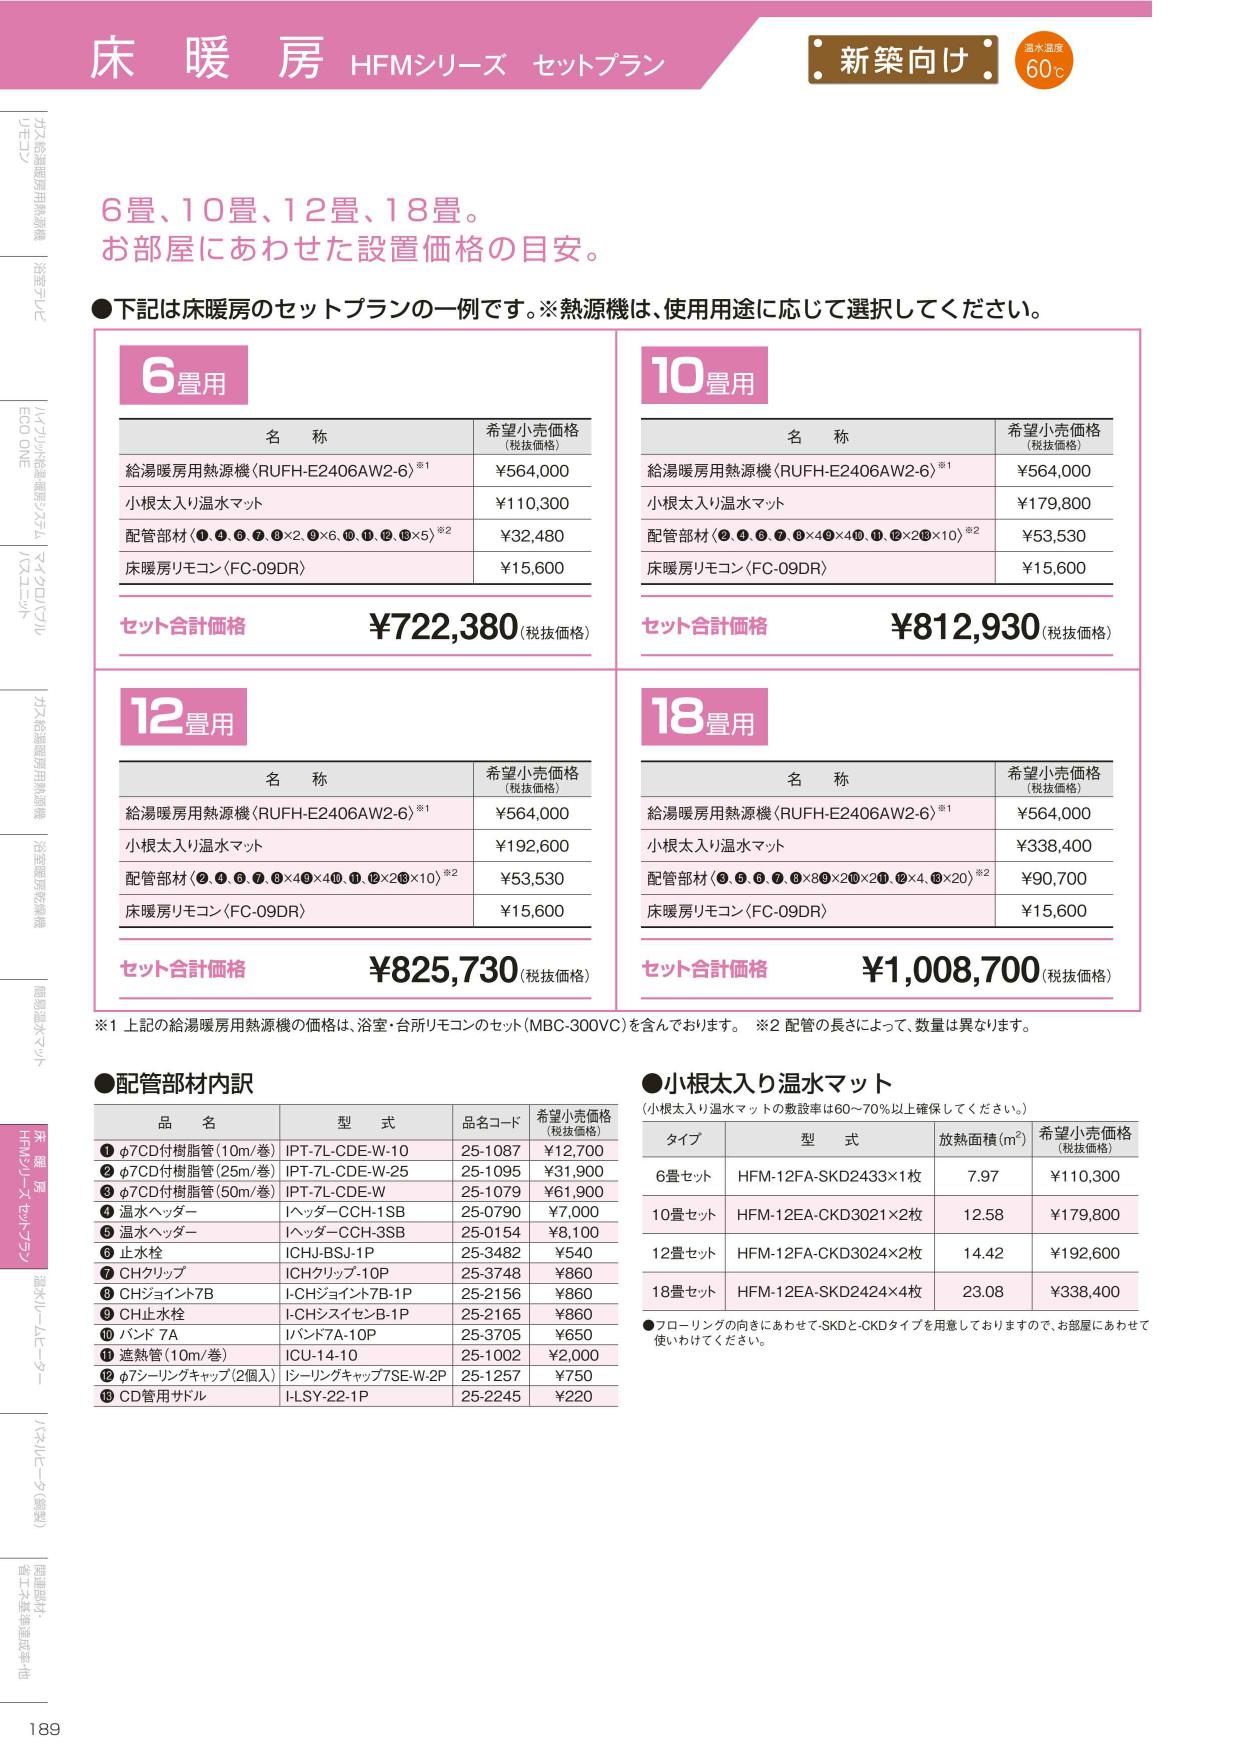 KANSAI 水性コンクリートフロア用 7KG グレー 379-032-7 (株)カンペハピオ - 3